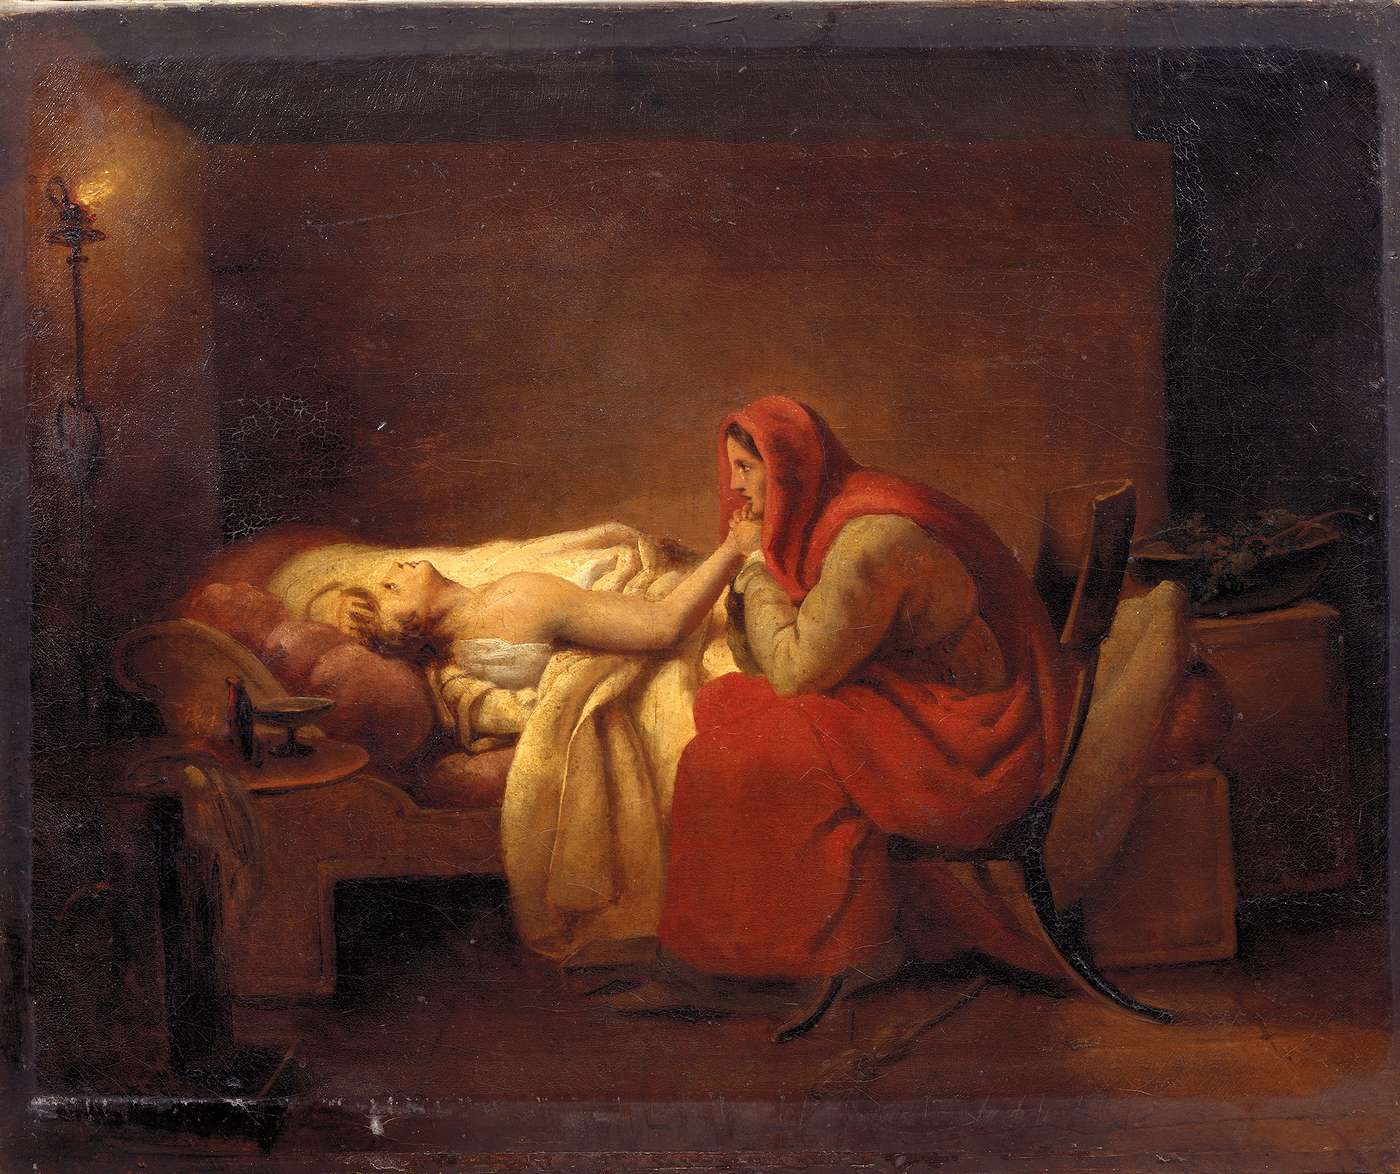 Le jeune malade. Ary SCHEFFER (1795 - 1858)